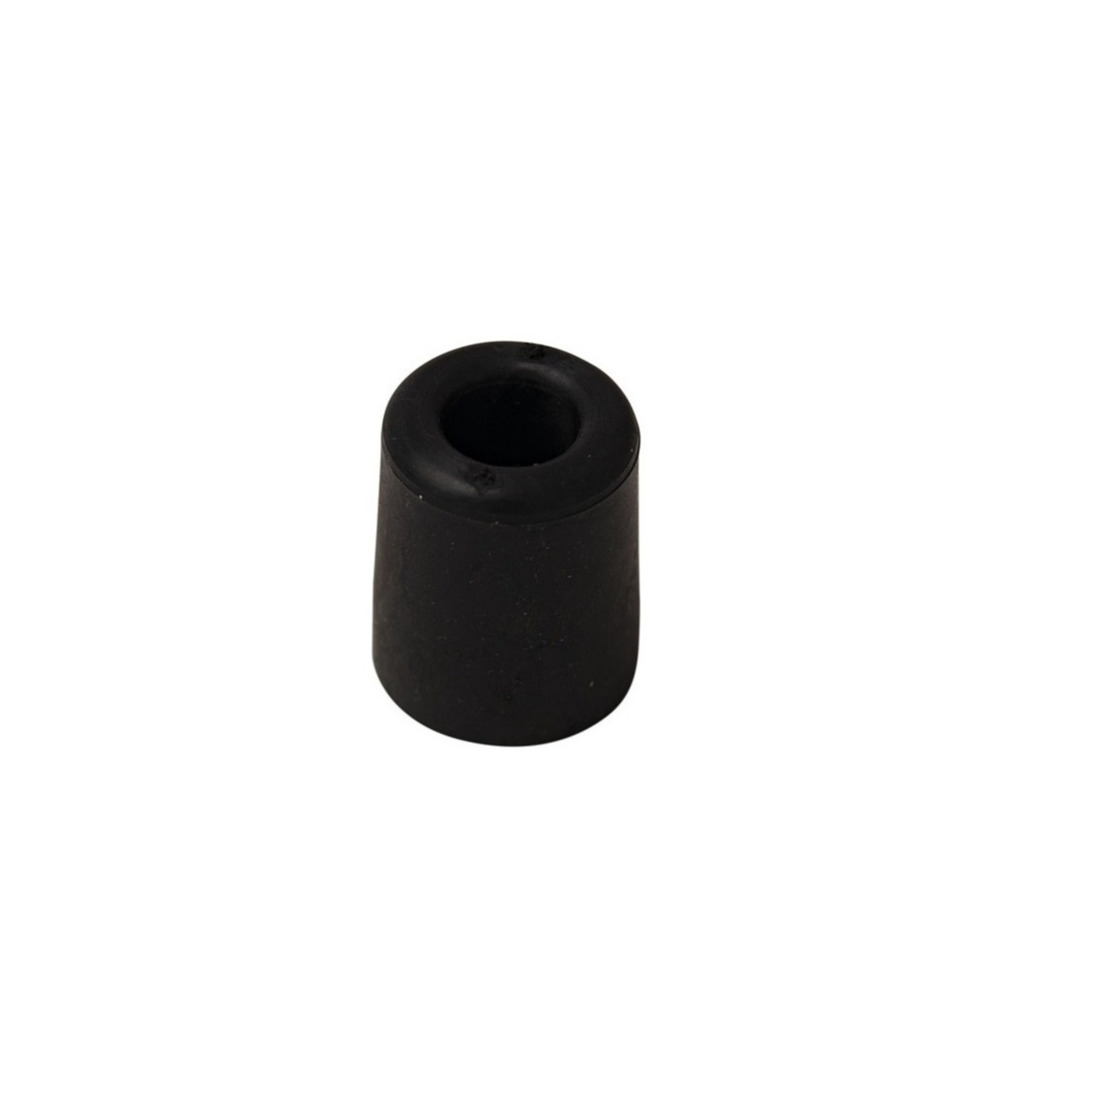 1x stuks deurstopper / deurbuffer rubber zwart 35 mm